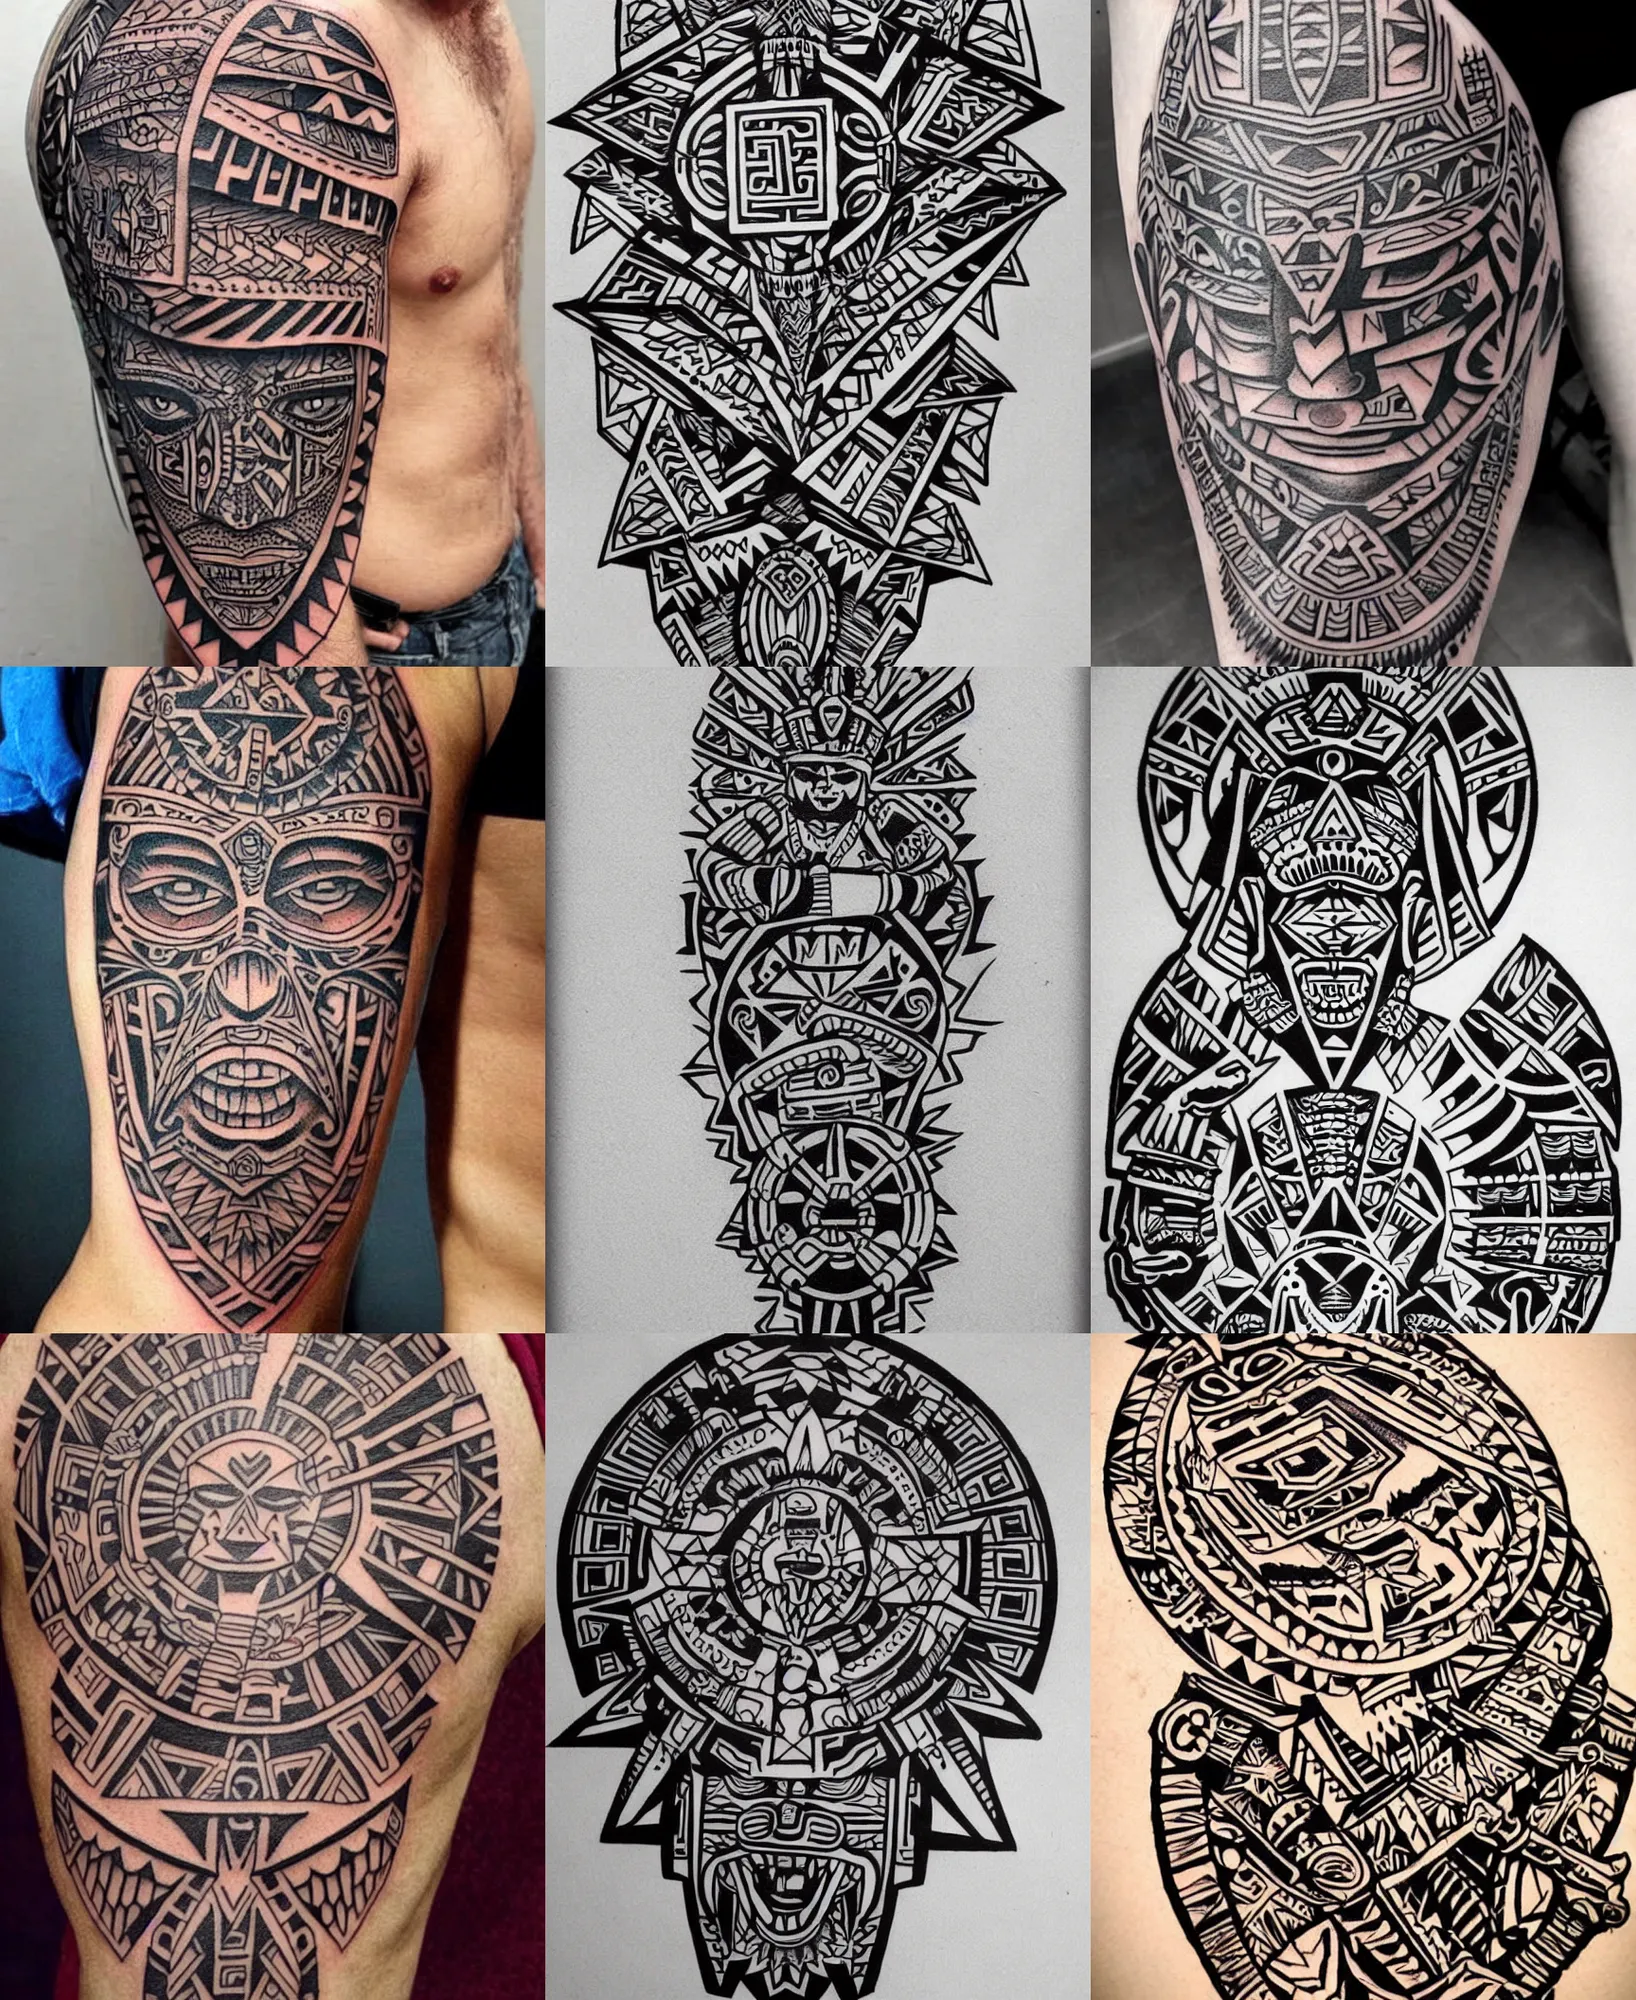 AZTECS & MAYANS TATTOOS: A Tattoo Design Book with Over 100 Aztecs and  Mayans Tattoos Designs for Real Tattoo Artists, Professionals and Amateurs.  Original, Modern Tattoo Designs That Will Inspire you: Prints,